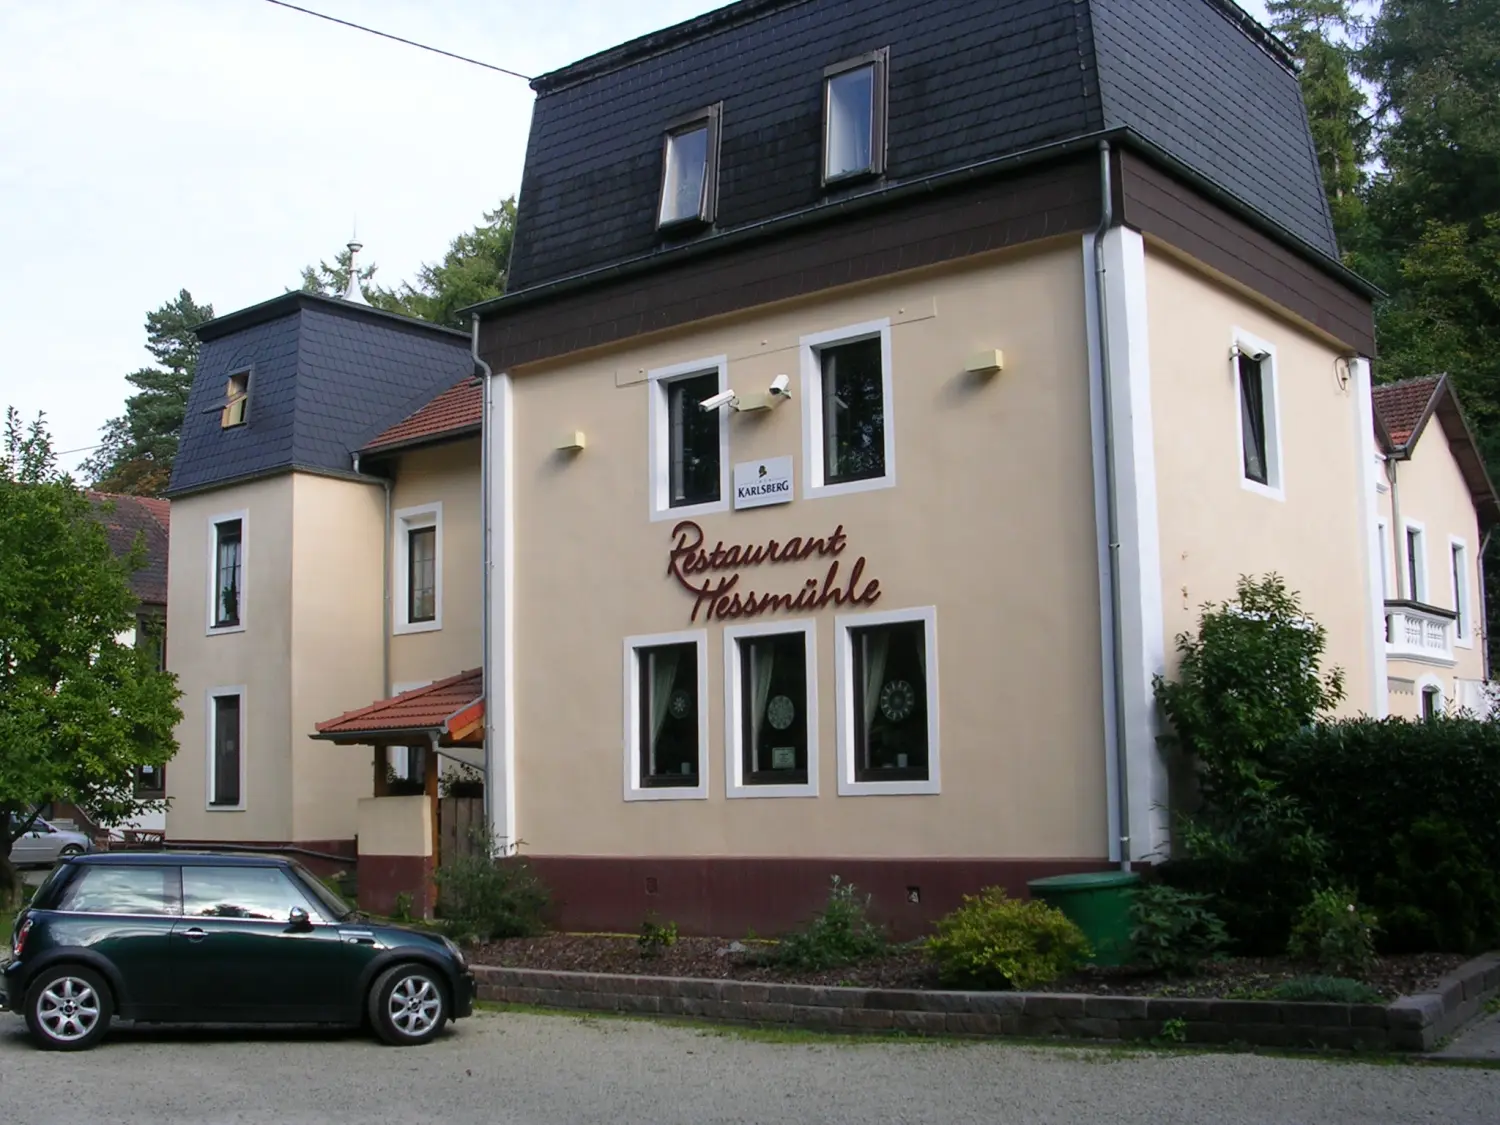 Restaurant Hessmühle